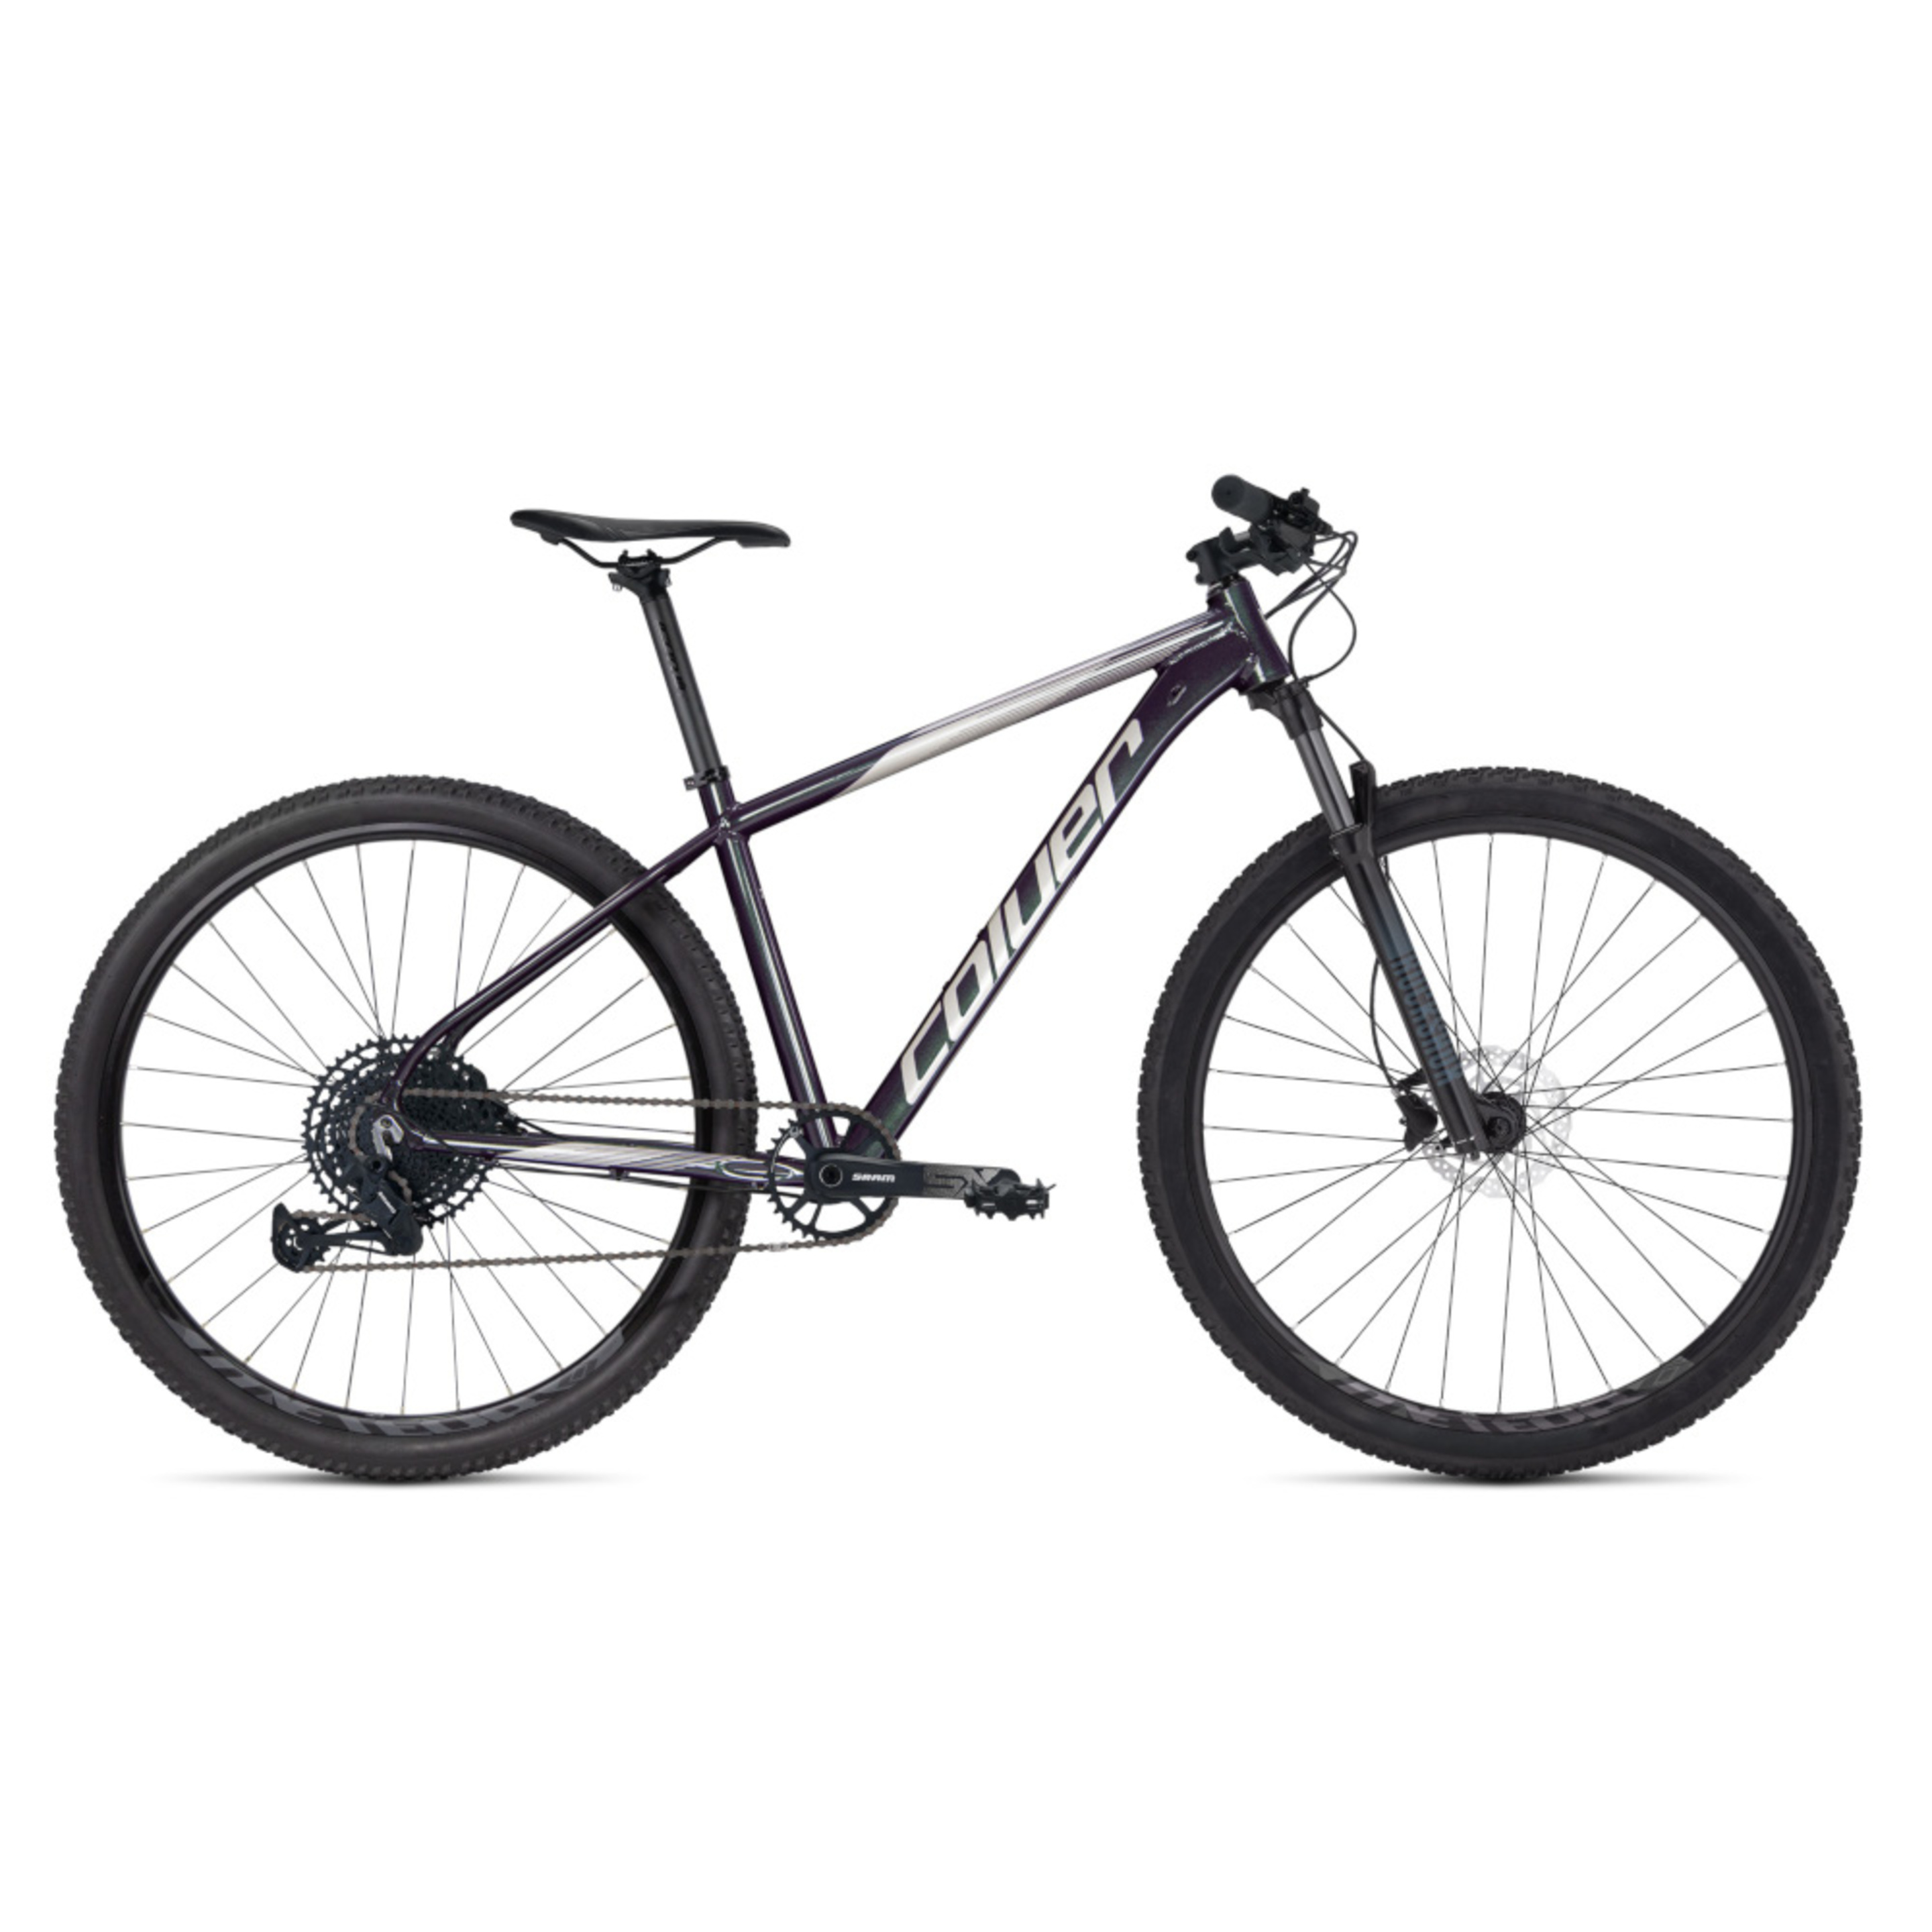 Mountain Bike 29" Coluer Limbo 298 - purpura - 